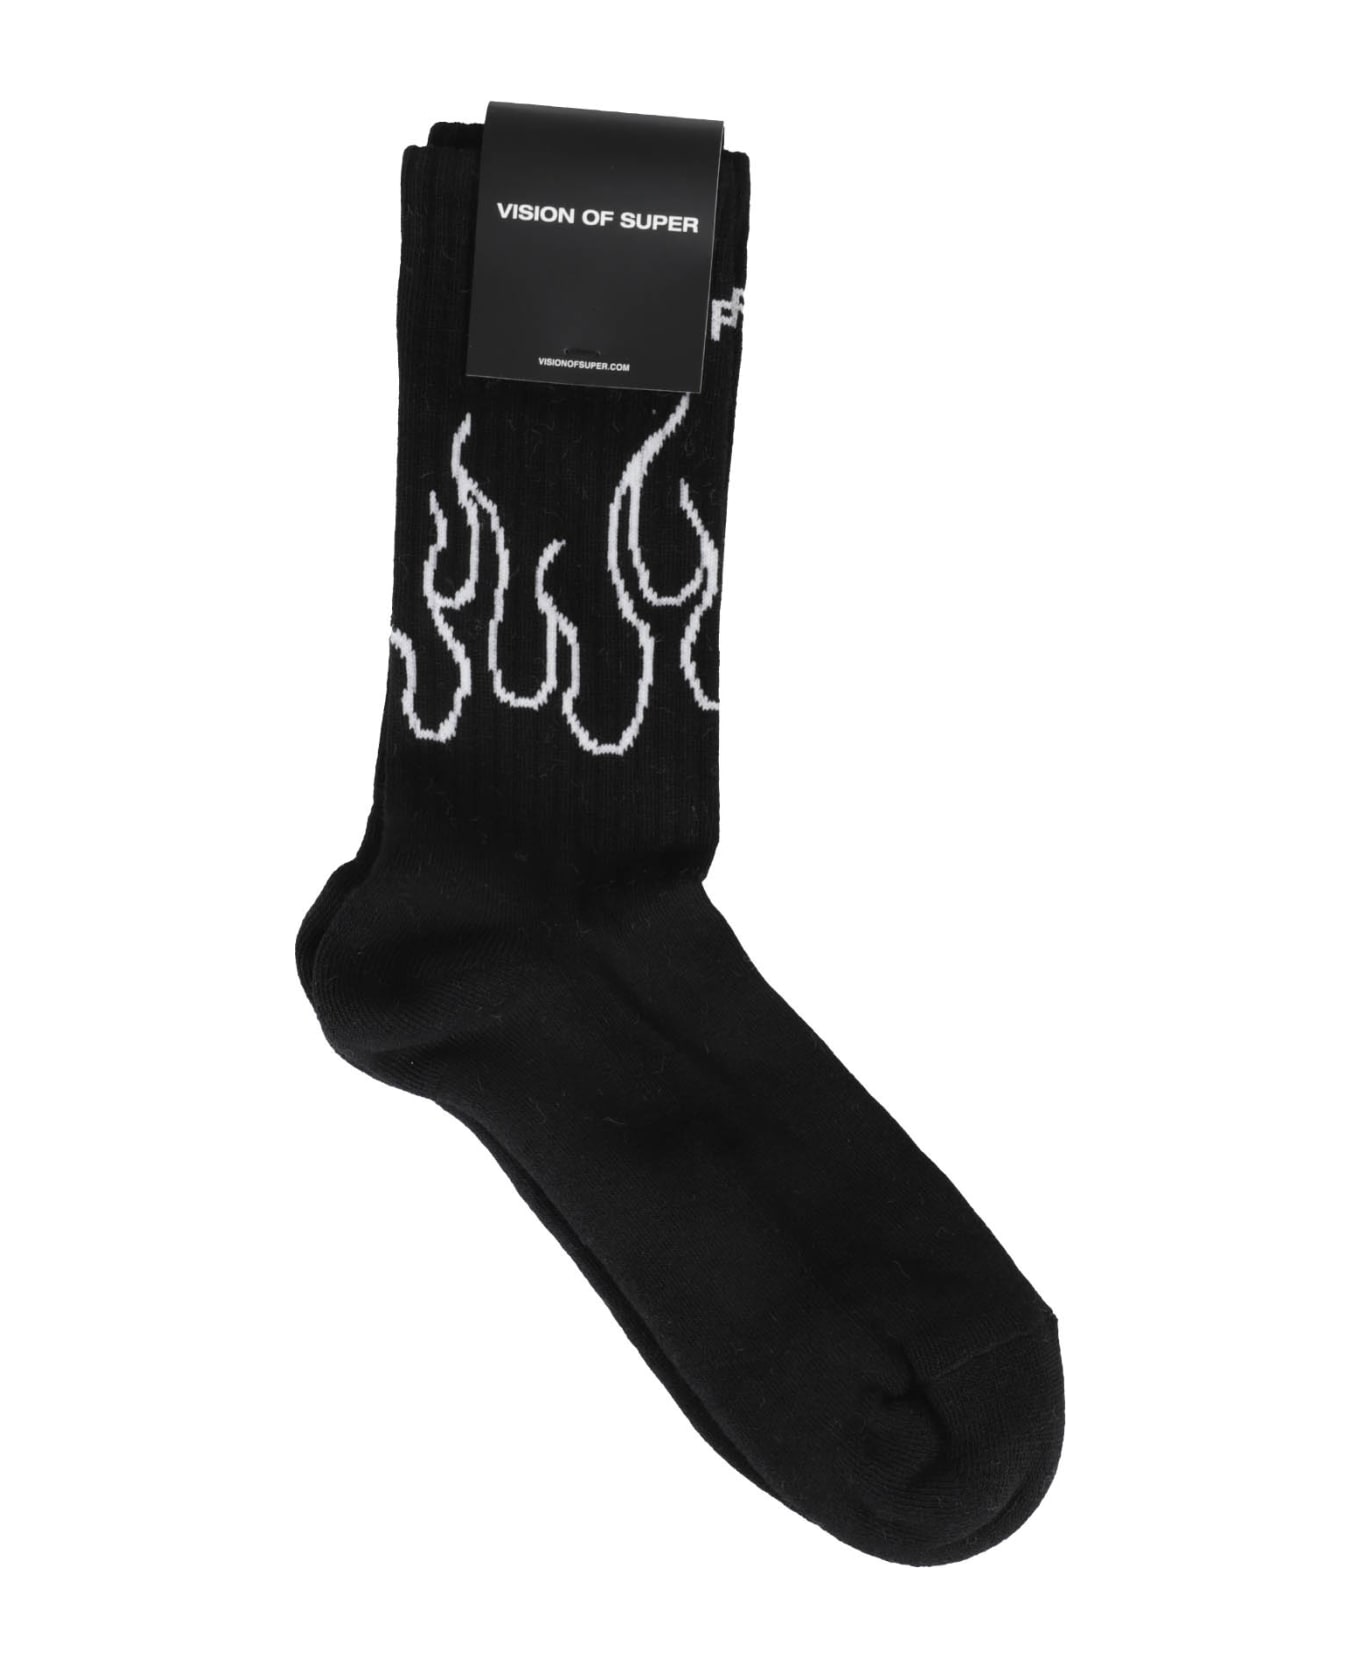 Vision of Super Black Socks With White Contour - Black White